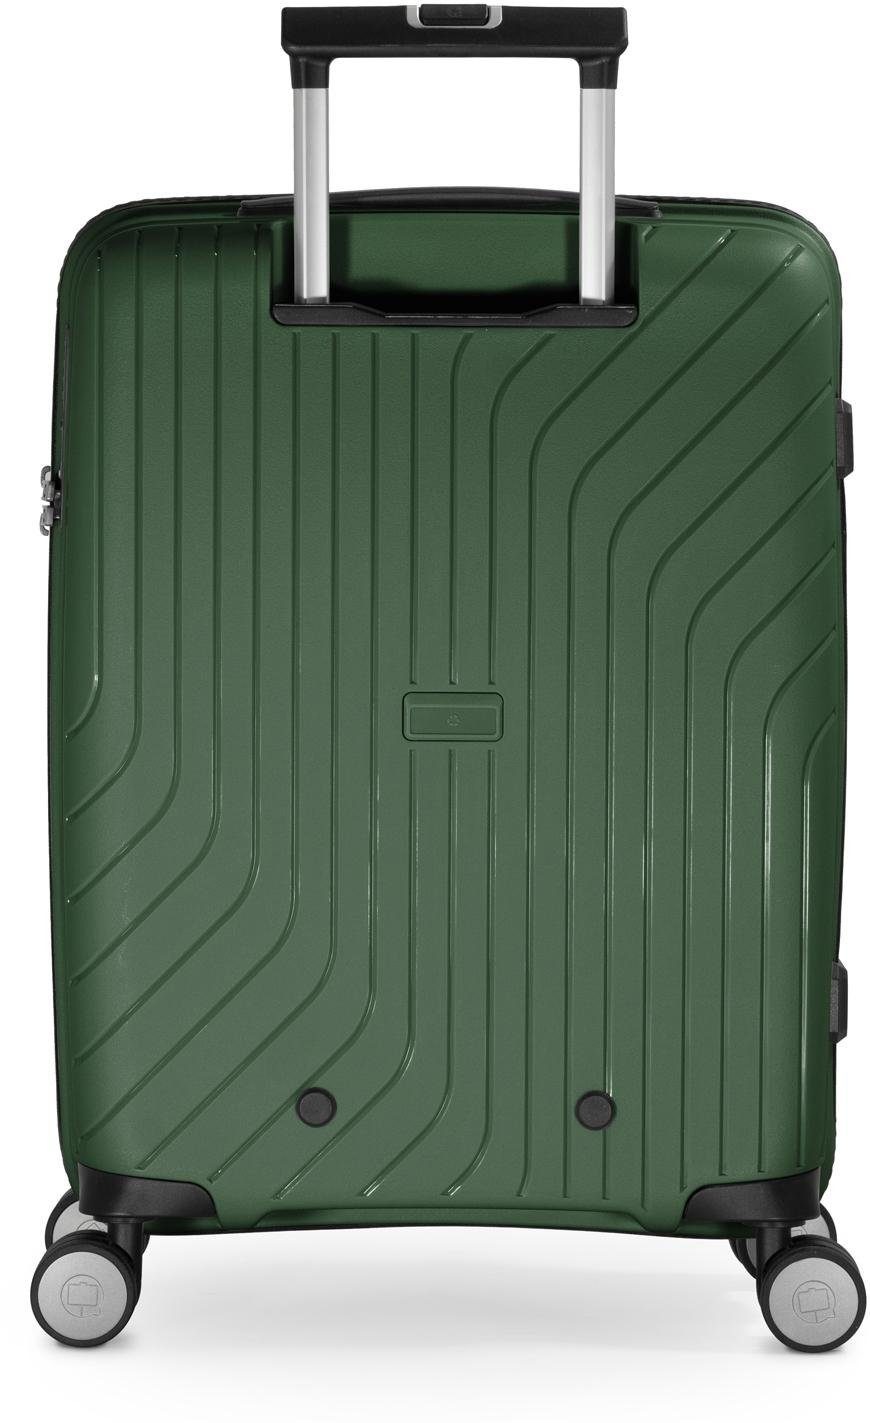 Hauptstadtkoffer Hartschalen-Trolley »TXL, 55 cm, dunkelgrün«, 4 Rollen, Hartschalen-Koffer Handgepäck-Koffer Reisegepäck TSA Schloss